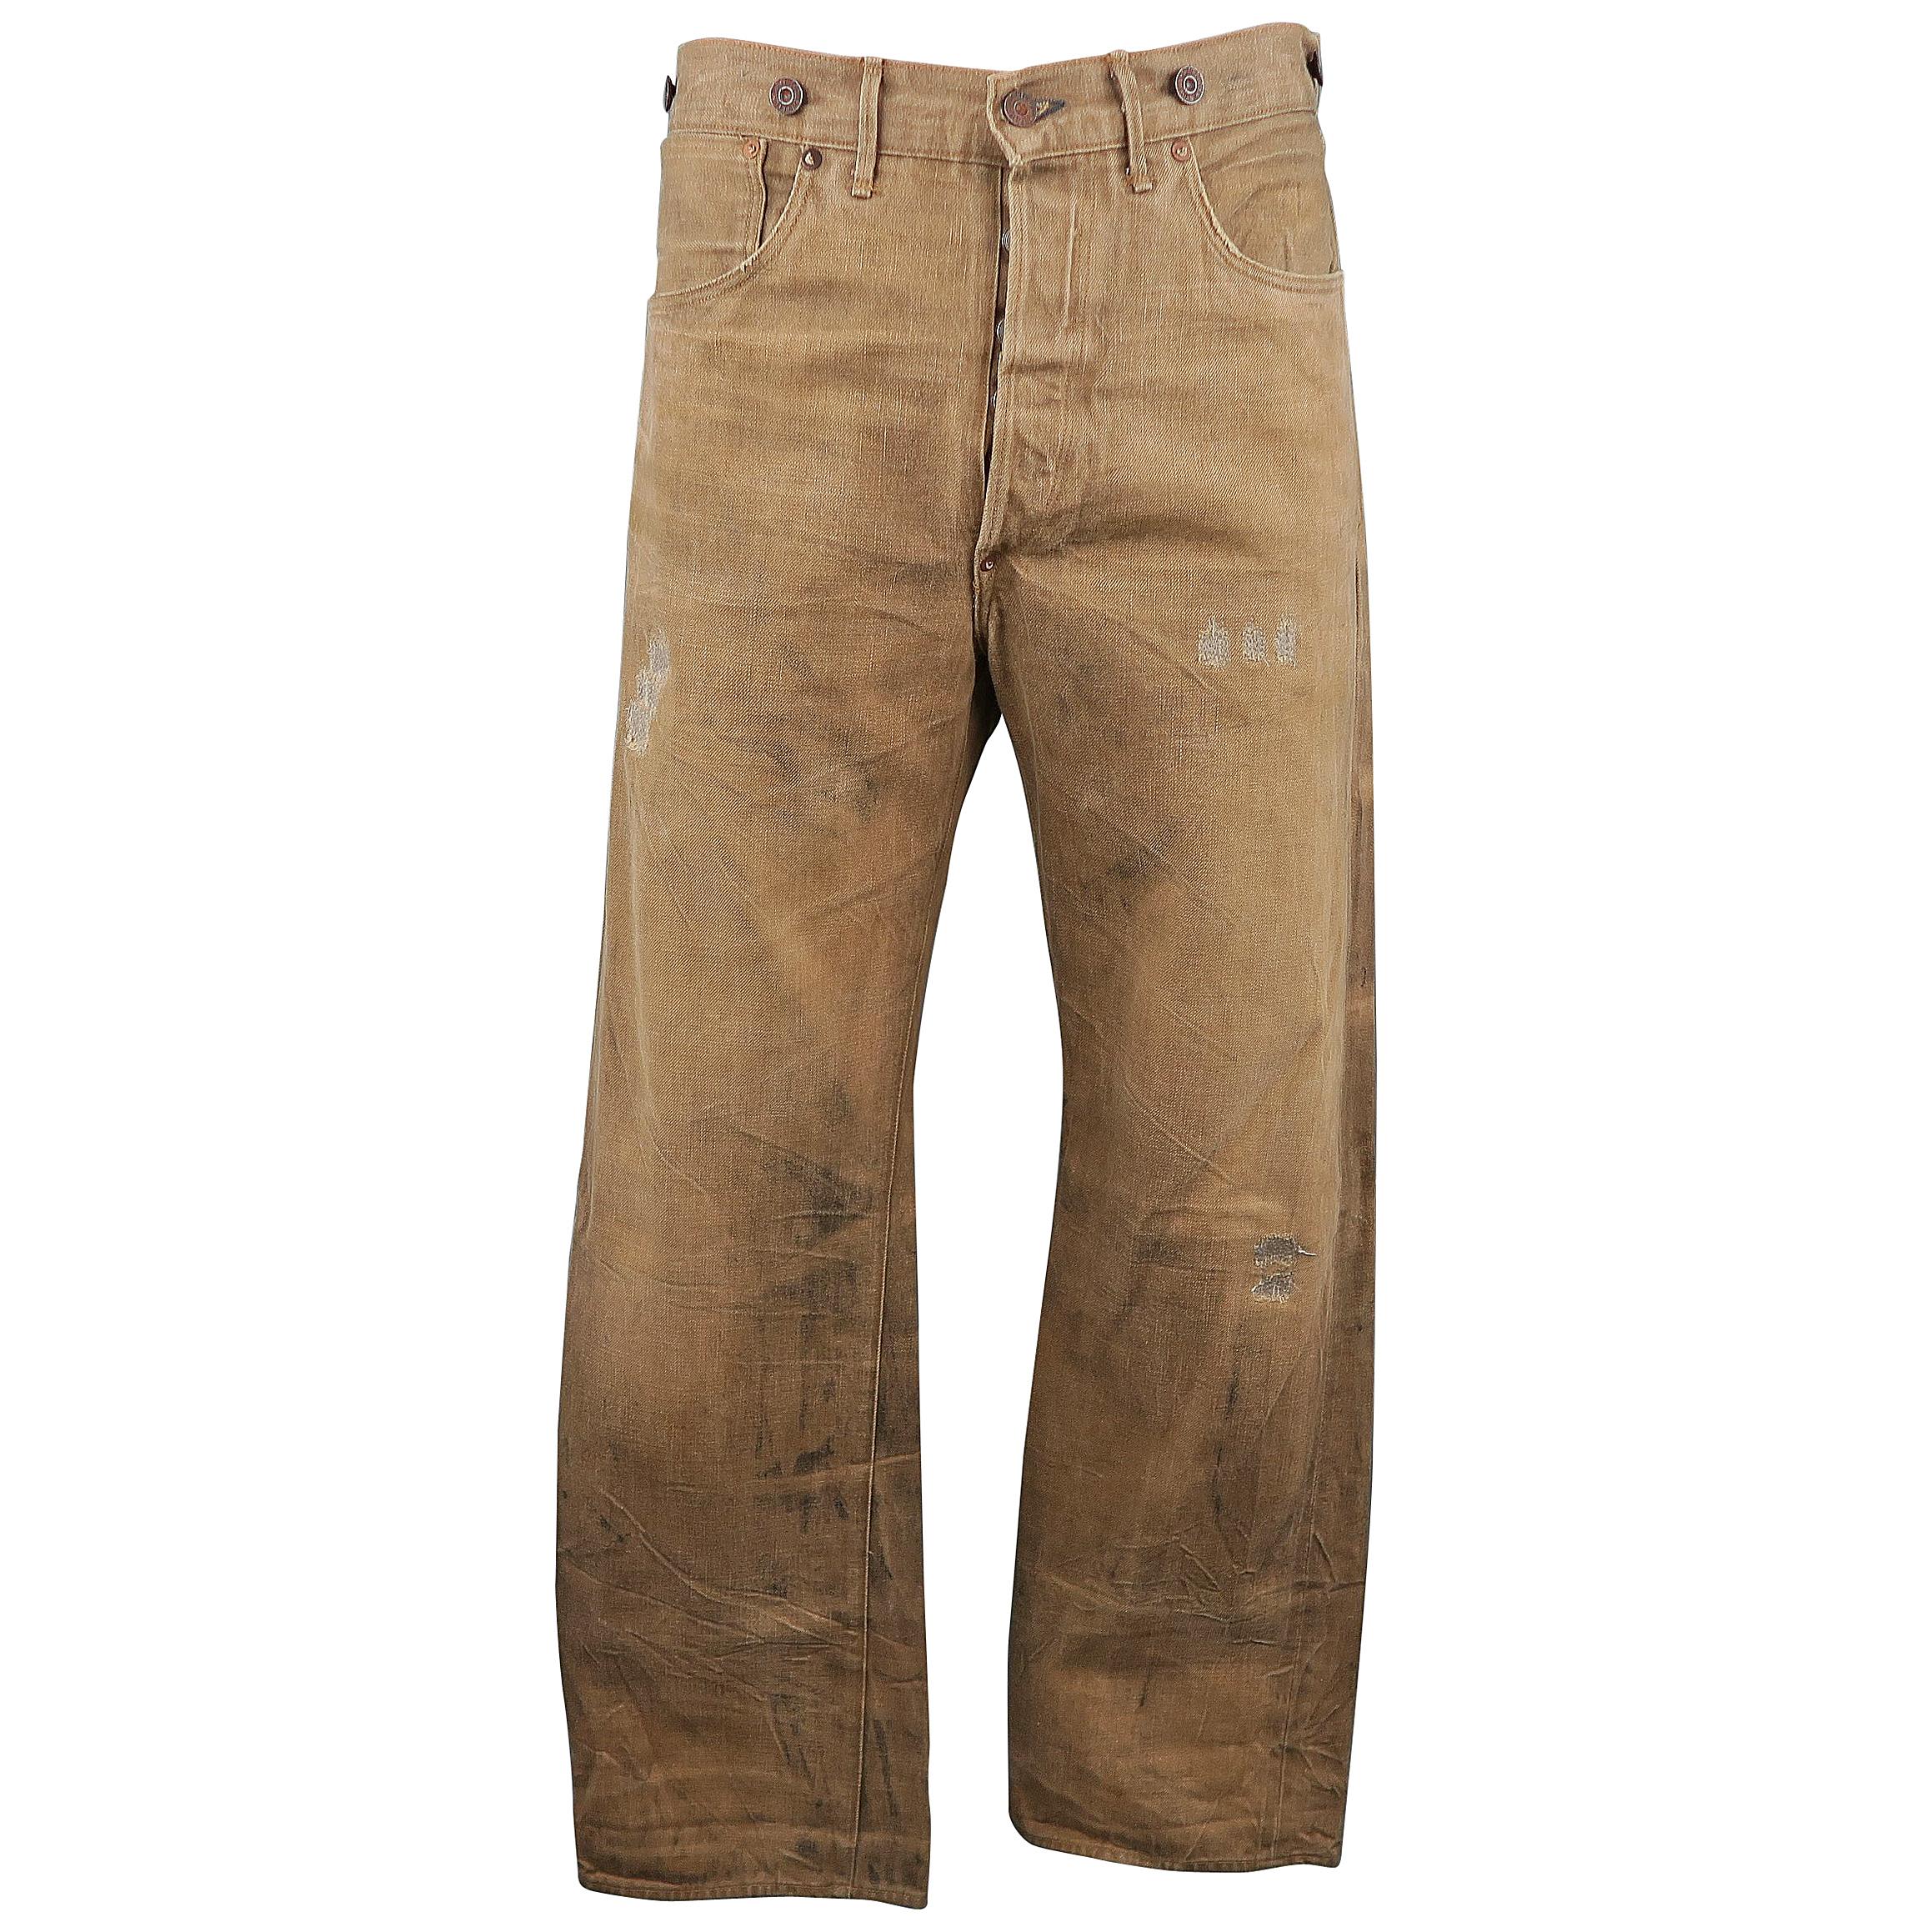 RRL by RALPH LAUREN Size 33 Tan Distressed Dirty Wash Selvedge Denim Jeans